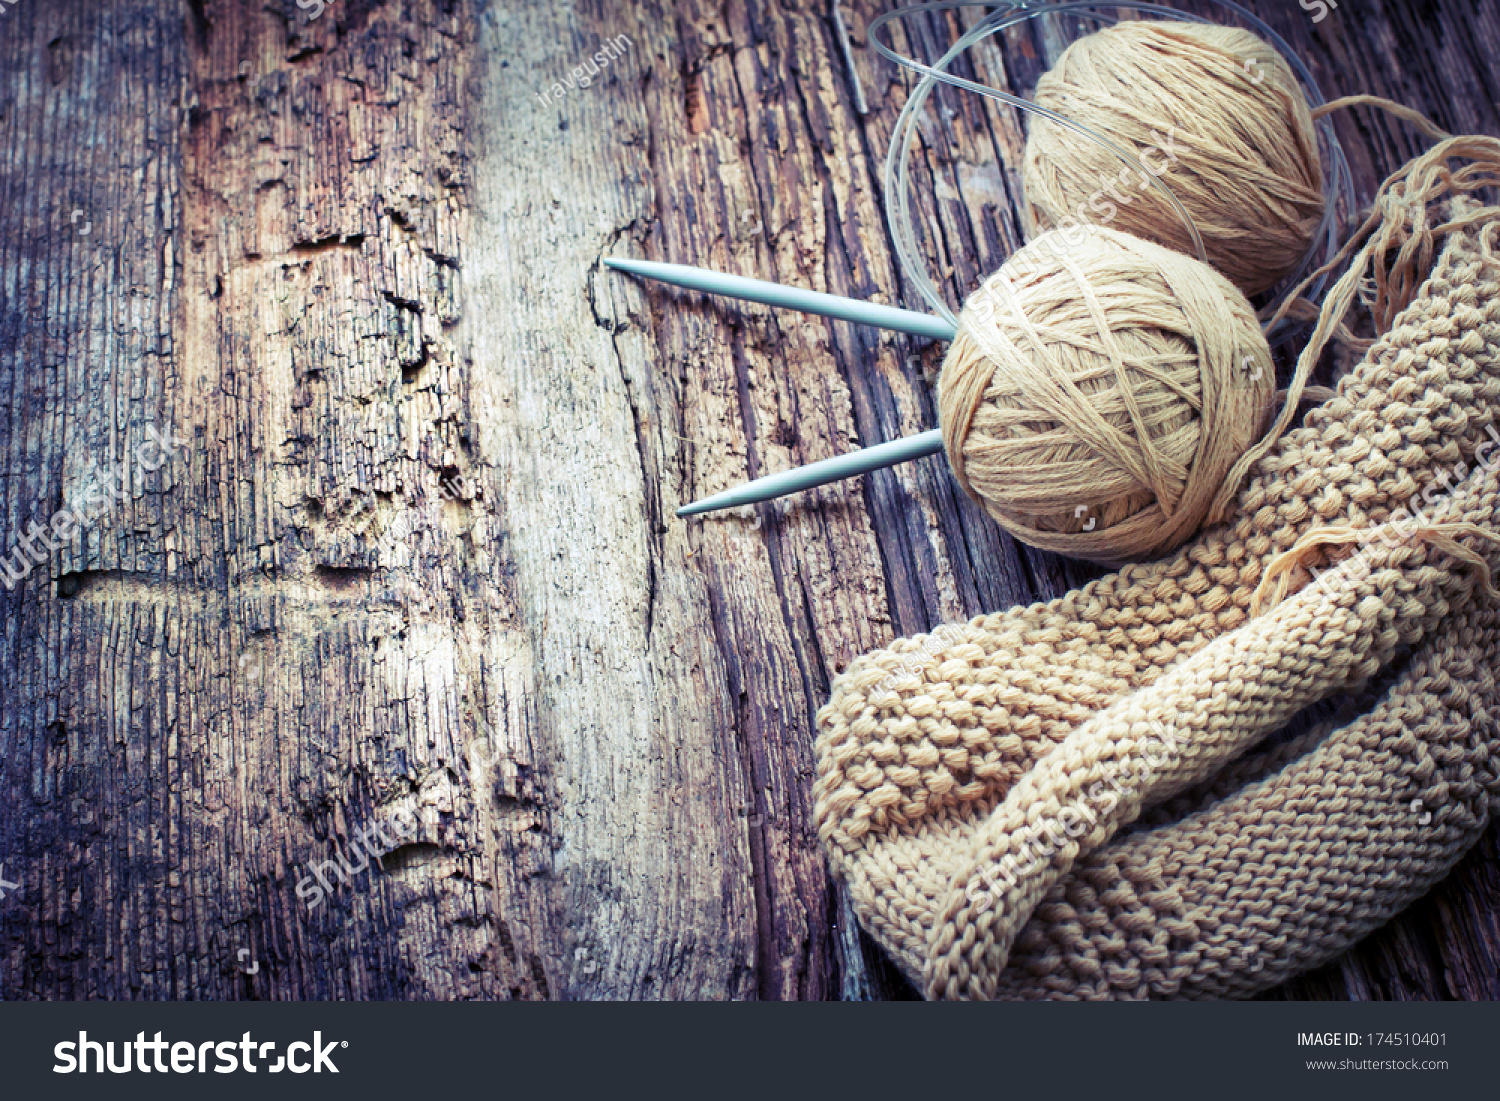 Knitting Needles Yarn On Rustic Wooden Stock Photo 174510401